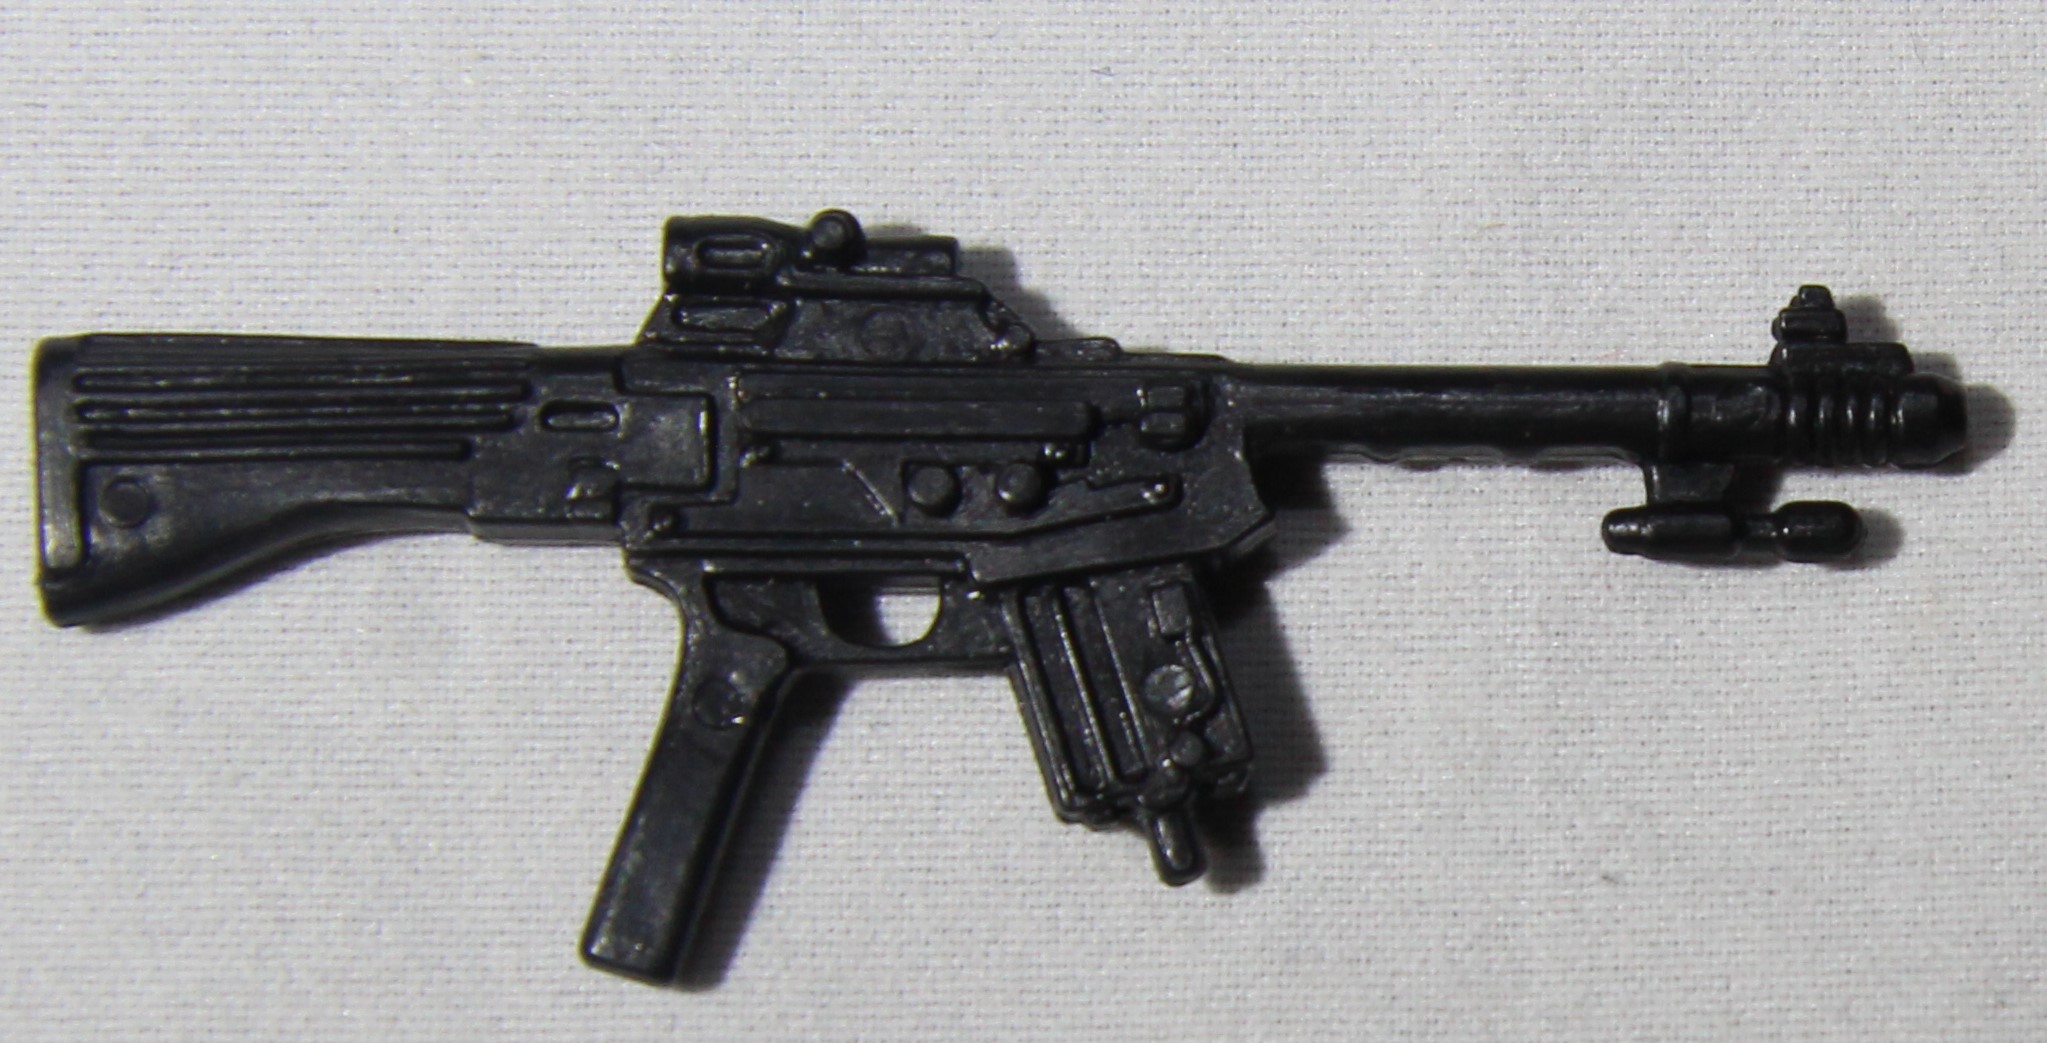 1986 Scifi Gun